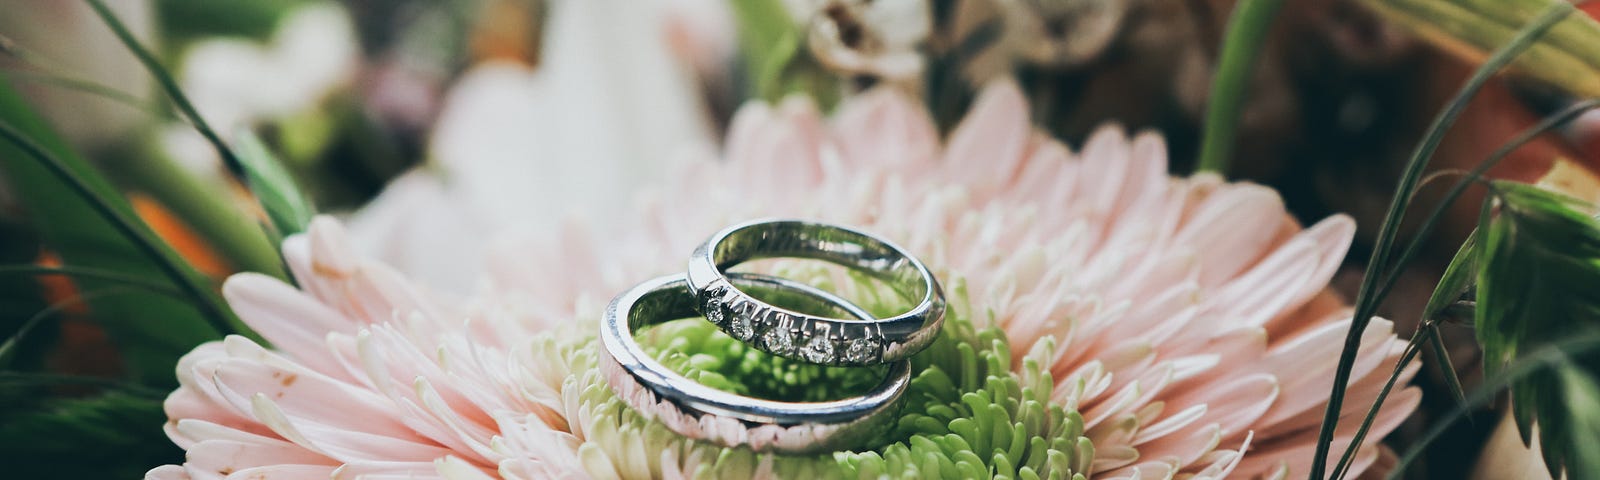 Wedding rings piled on a flower.